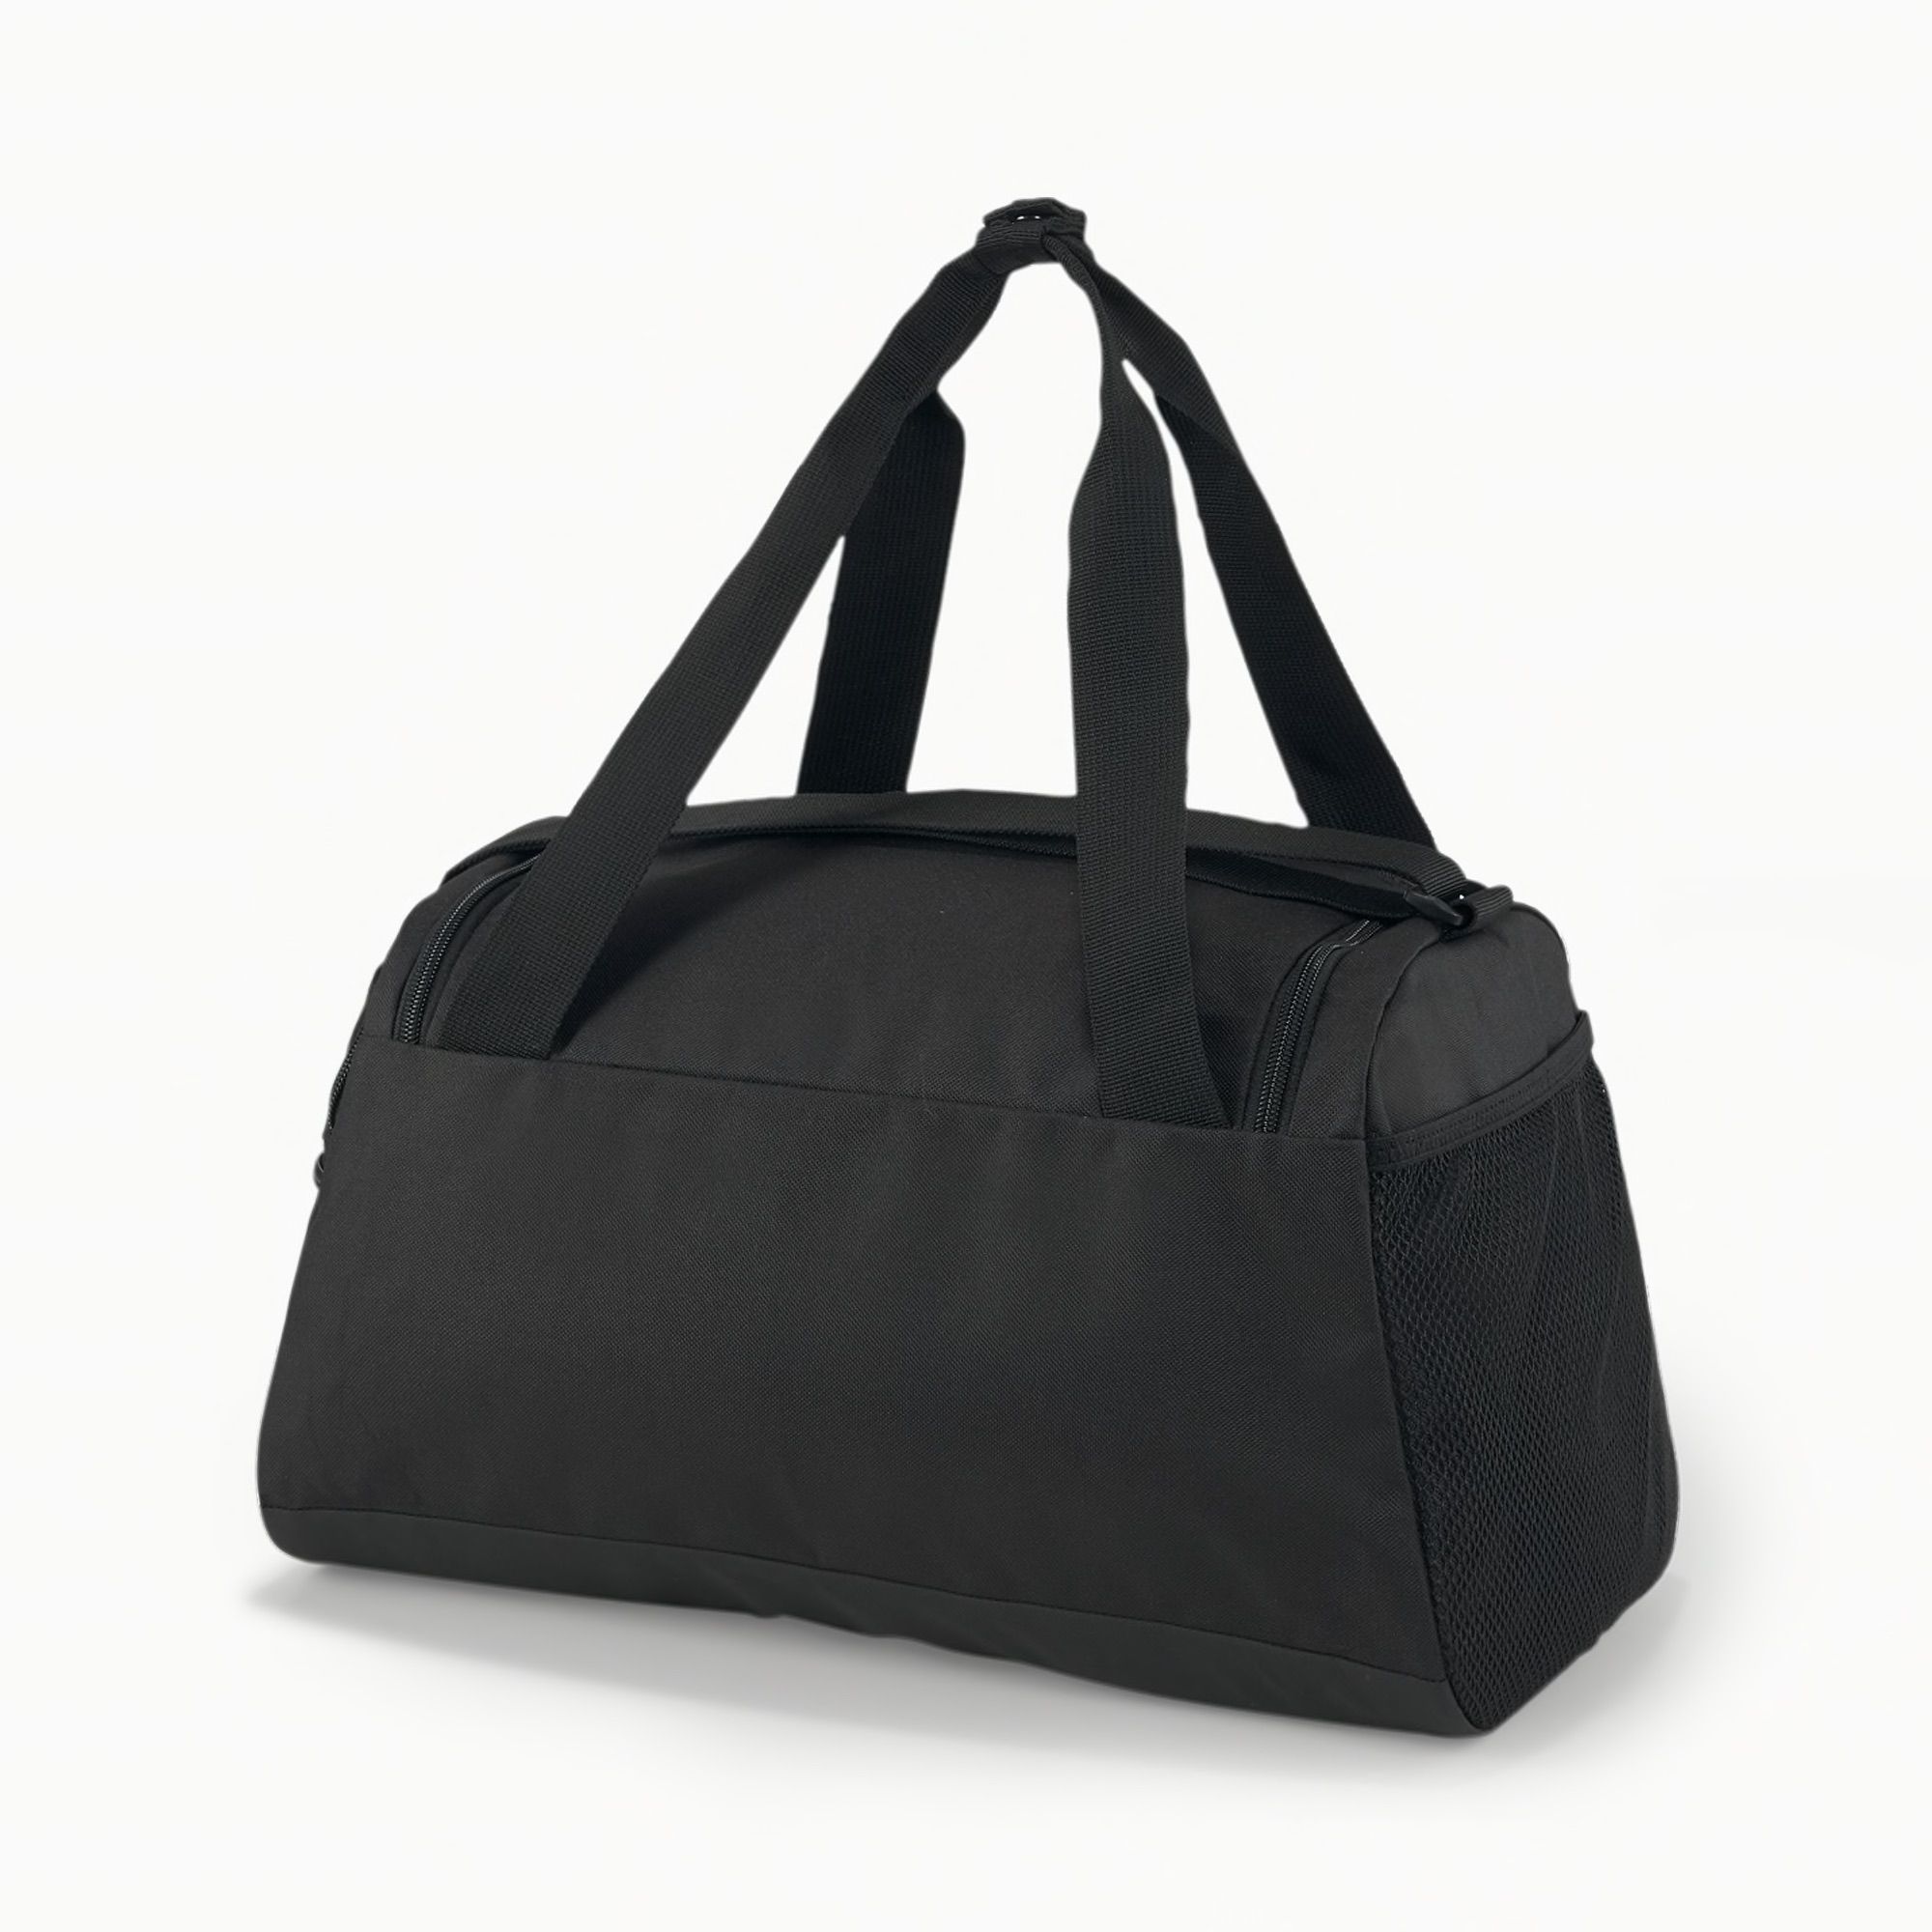  Puma Challenger Duffle Bag XS - Black 